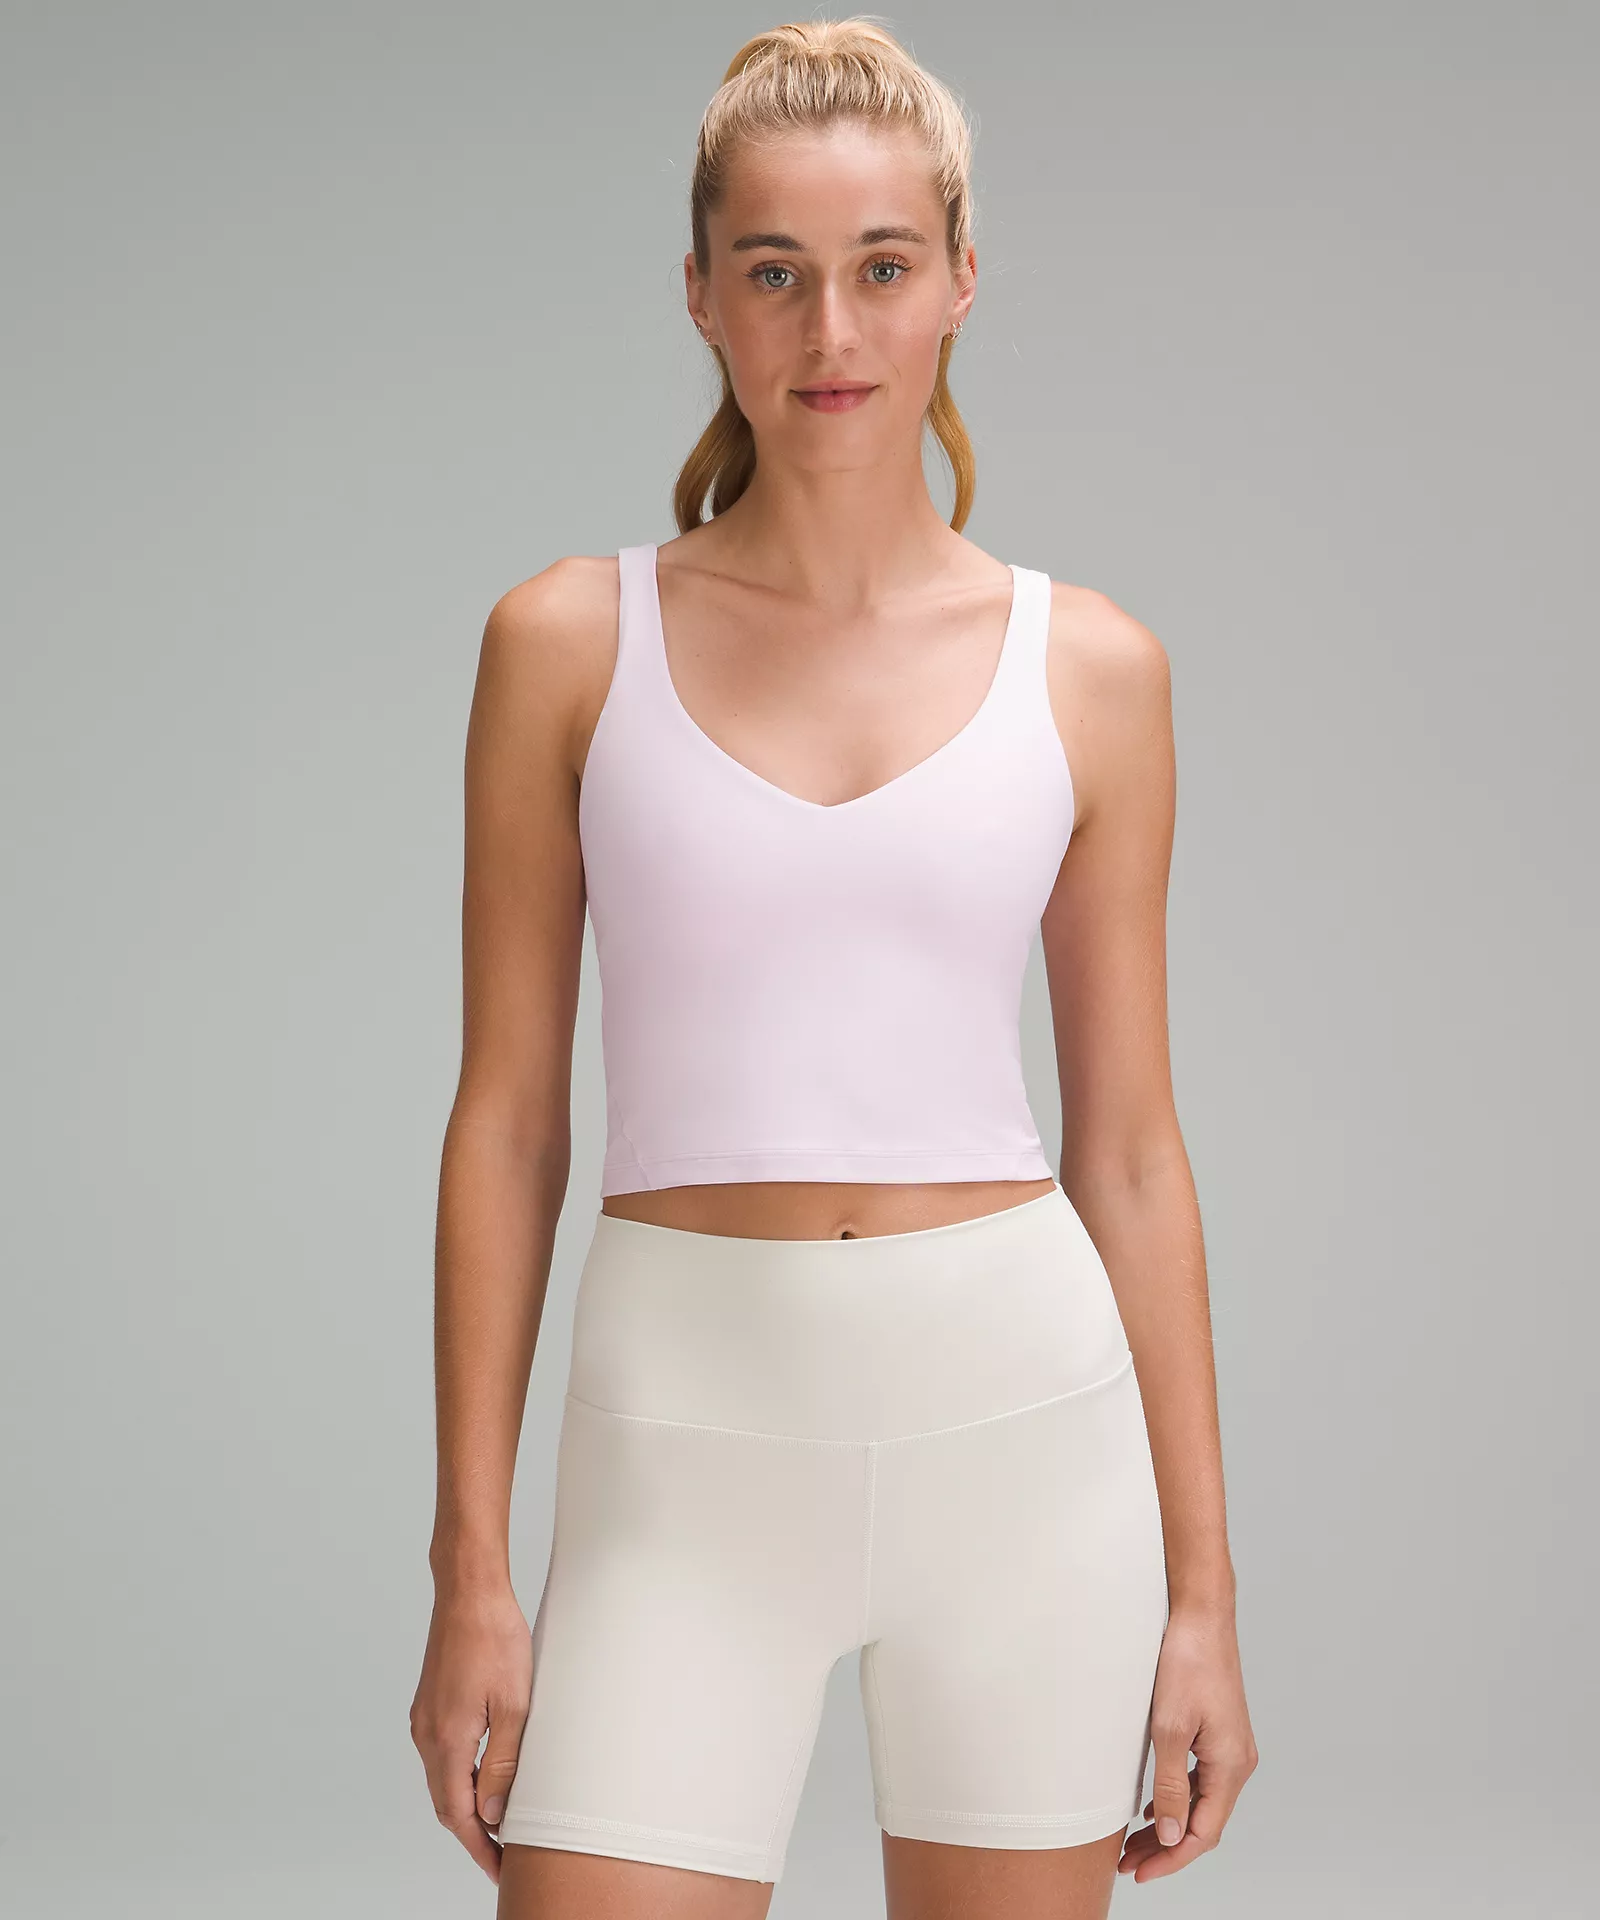 Letsfit Sports Bra Crop Top Athletic Yoga Medium White Lululemon Dupe